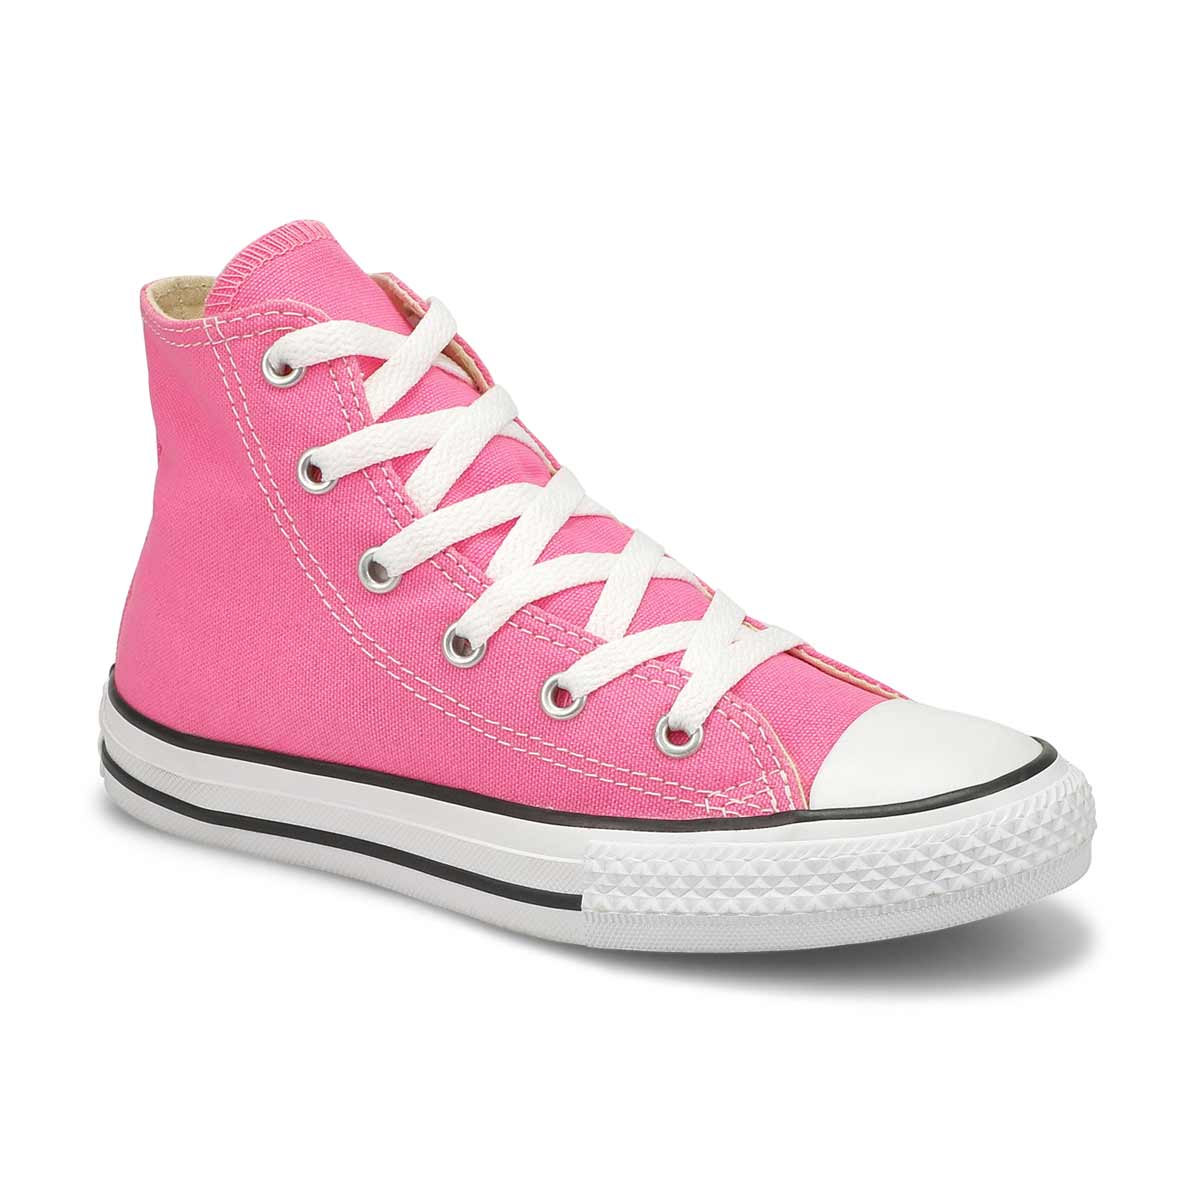 pink converse size 9